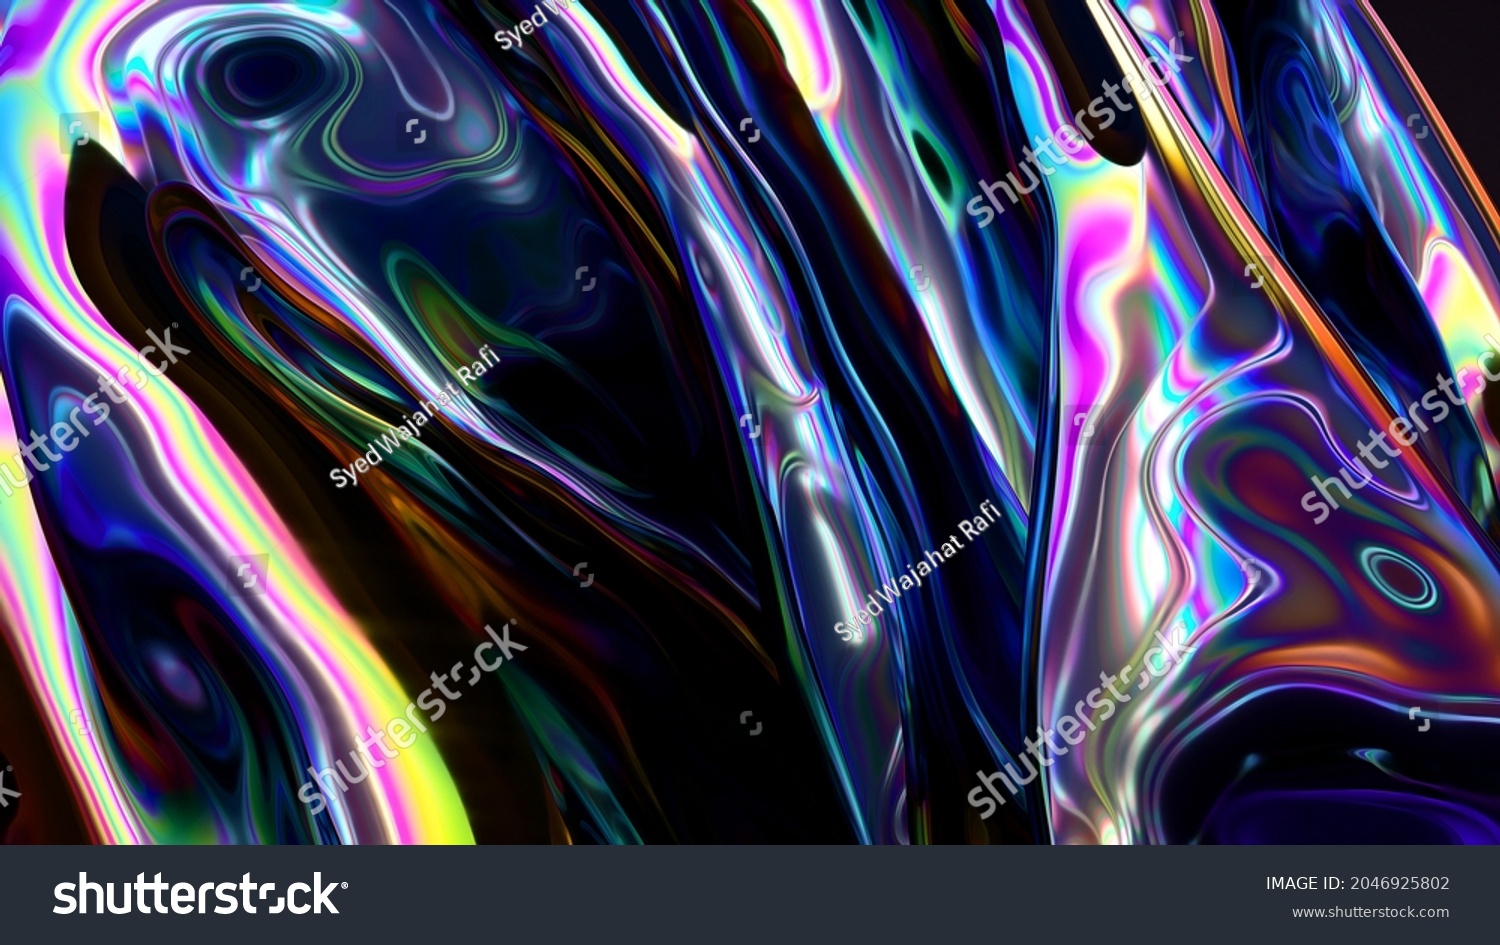 3d render, abstract background, iridescent holographic foil, metallic texture, ultraviolet wavy wallpaper, fluid ripples, liquid metal surface, esoteric aura spectrum, bright hue colors #2046925802